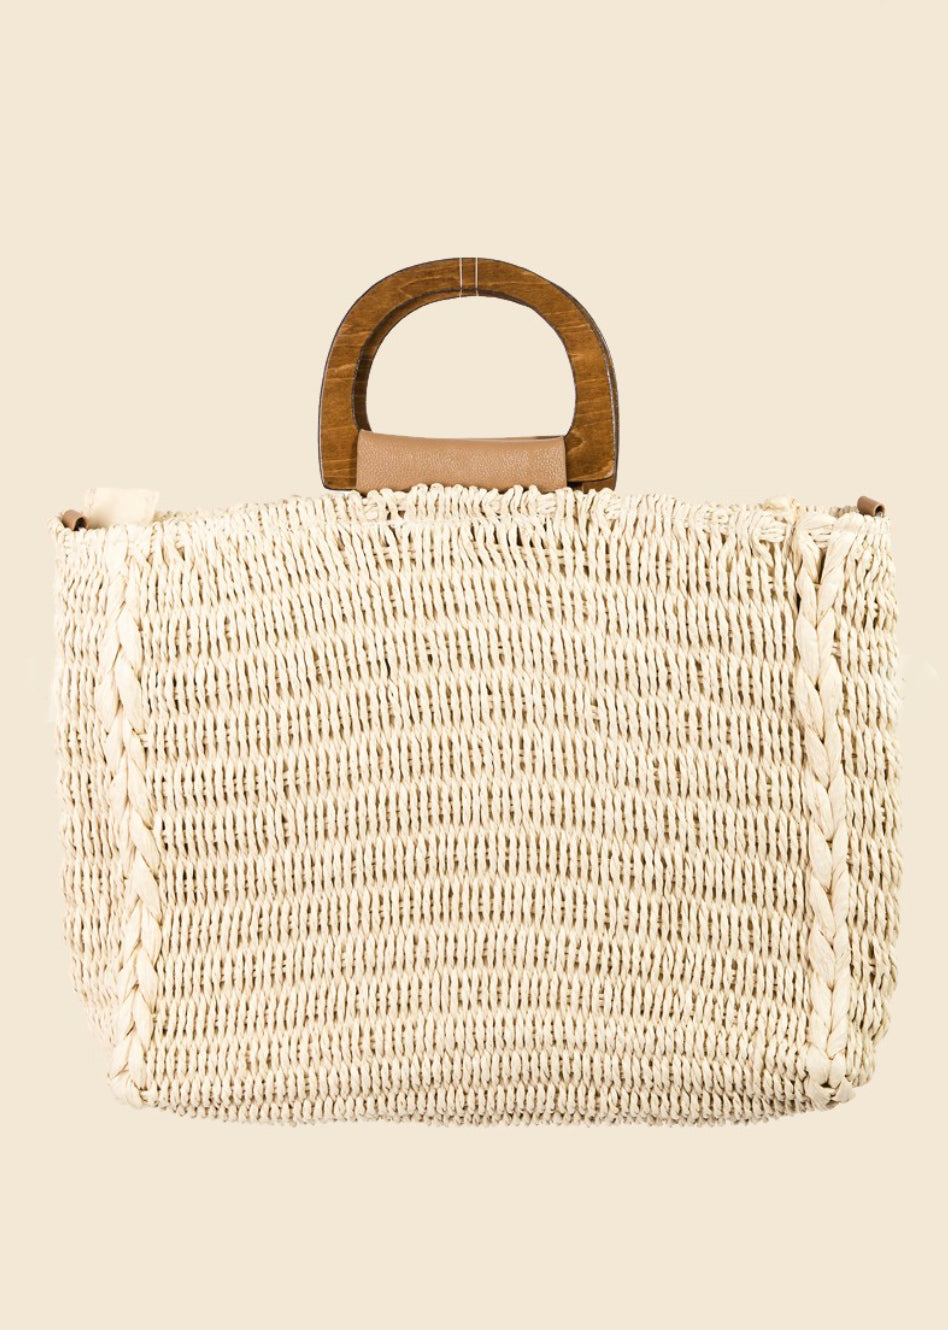 Large Straw Bags for Women,Straw Travel Beach Totes Bag Woven Summer Tote  Handmade Shoulder Bag Handbag - Walmart.com